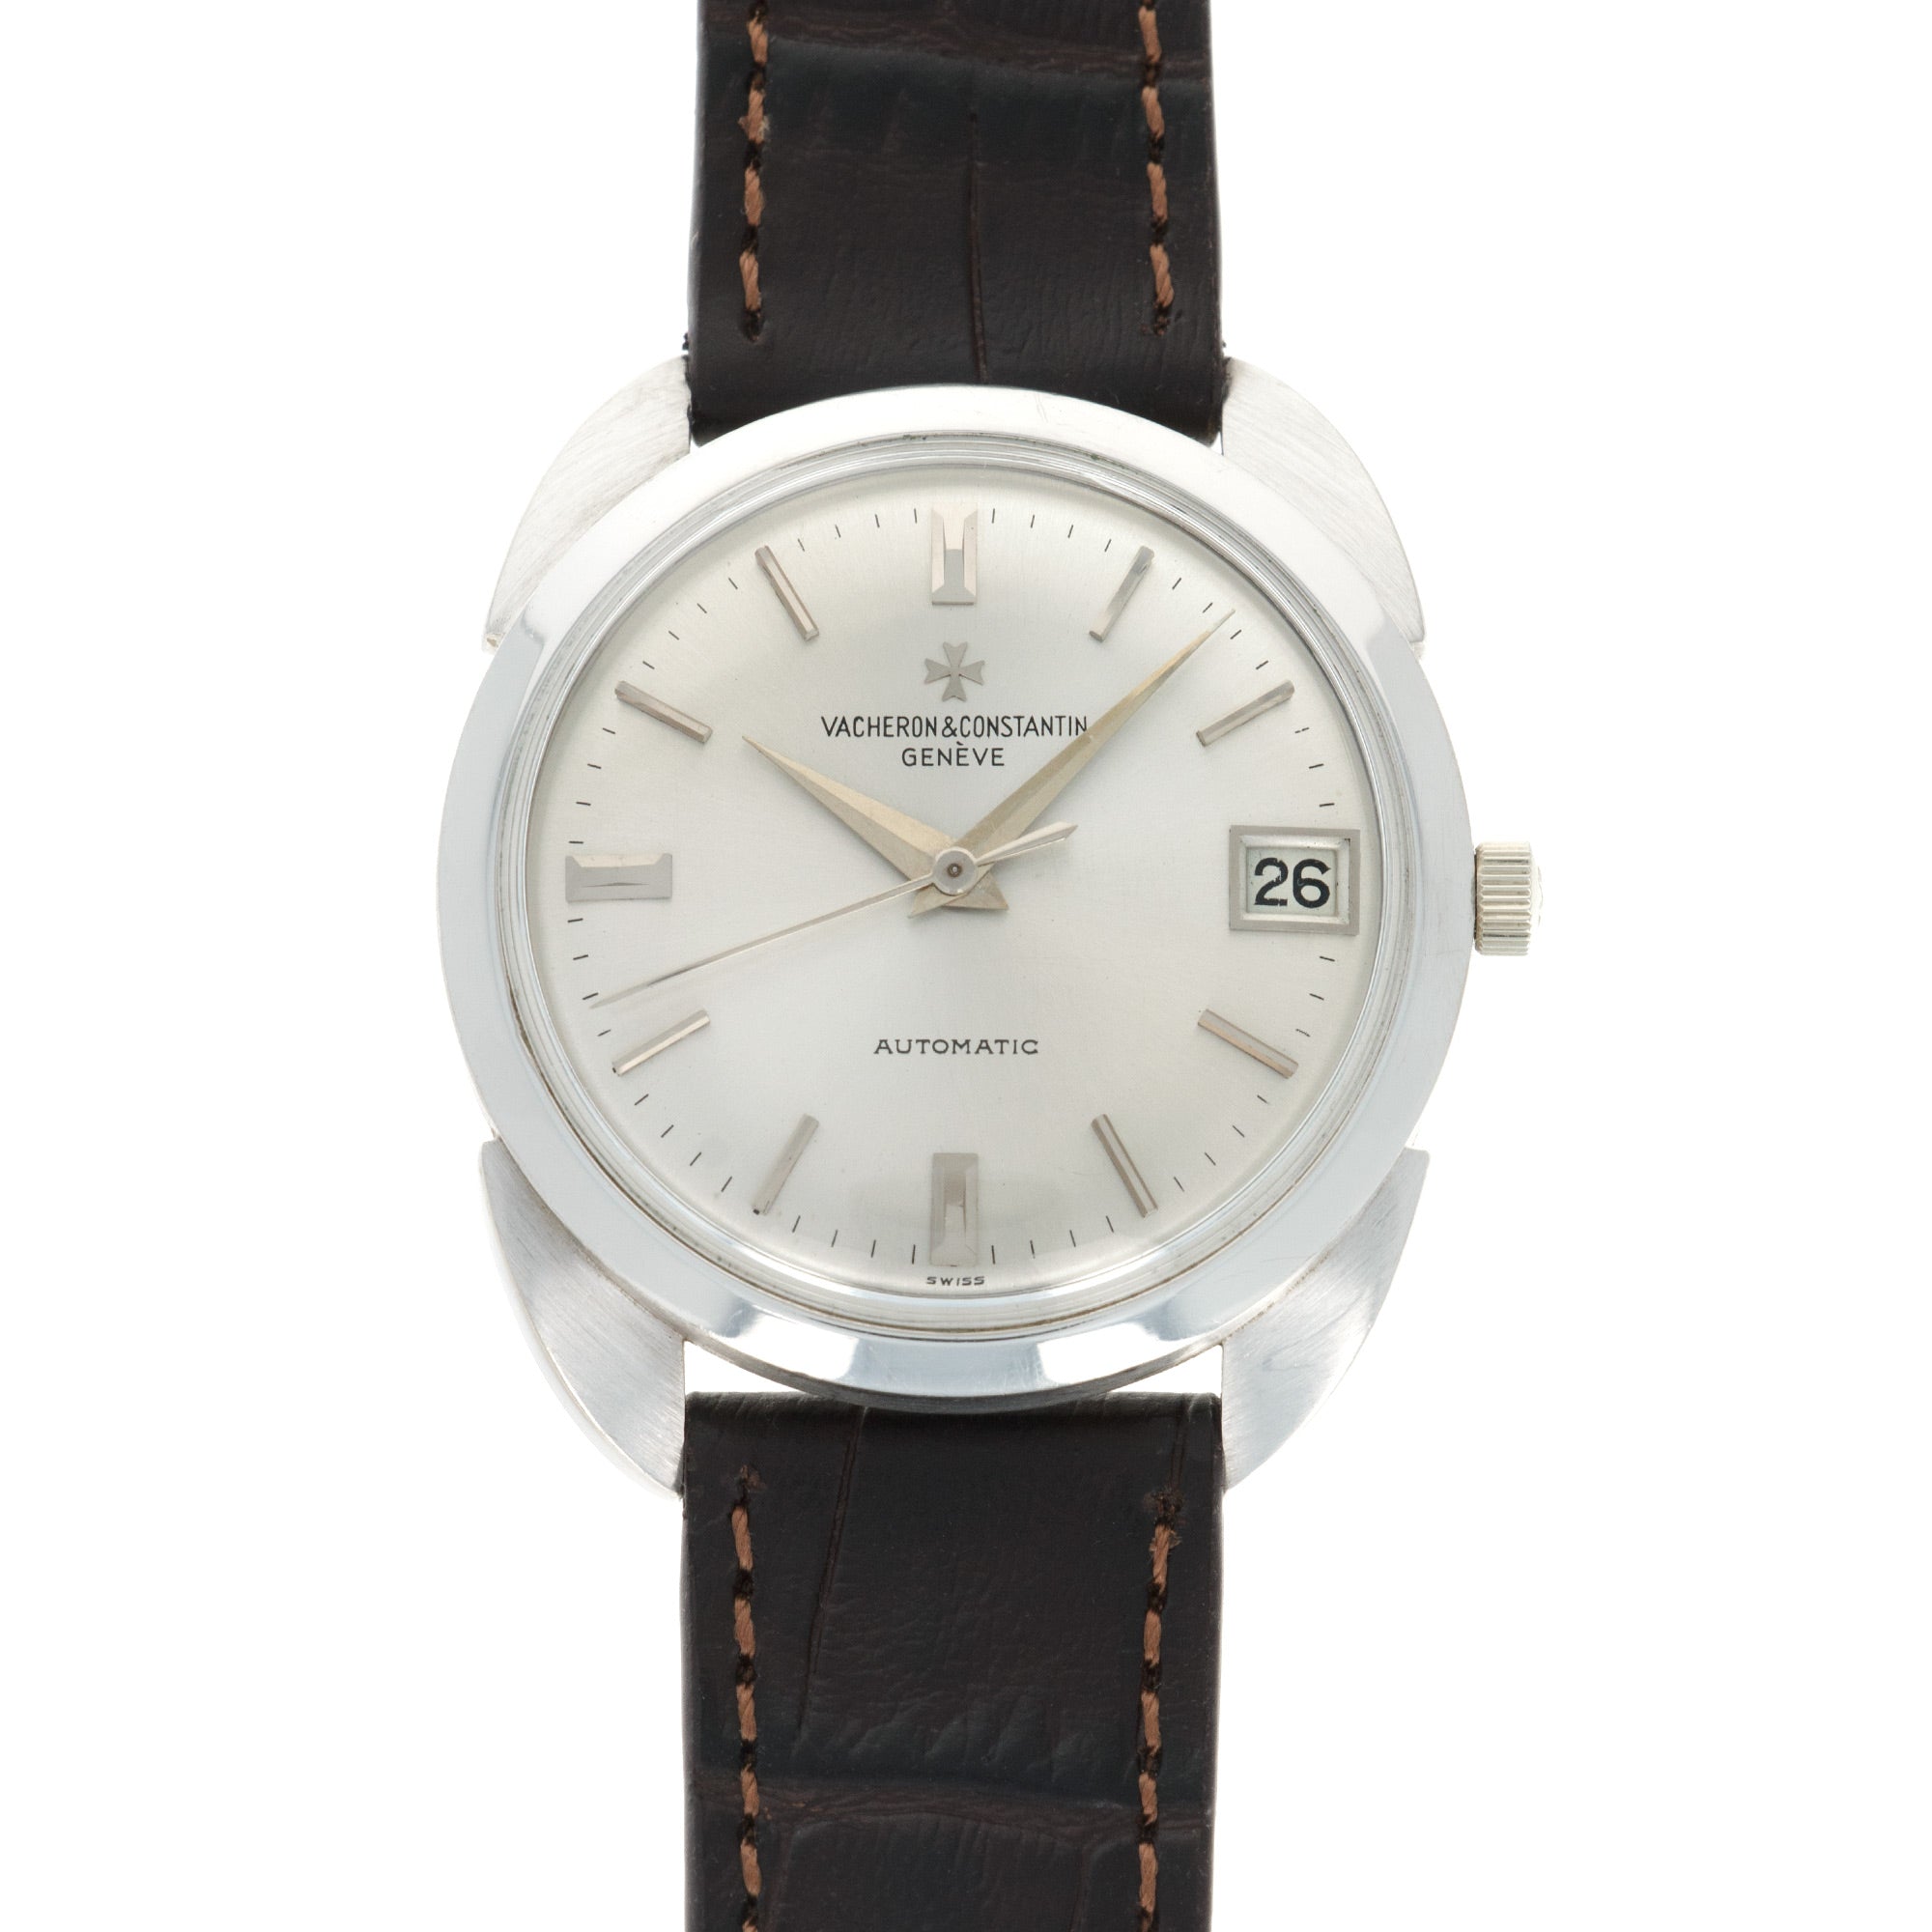 Vacheron Constantin - Vacheron Constantin White Gold Royal Chronometer Automatic Watch - The Keystone Watches